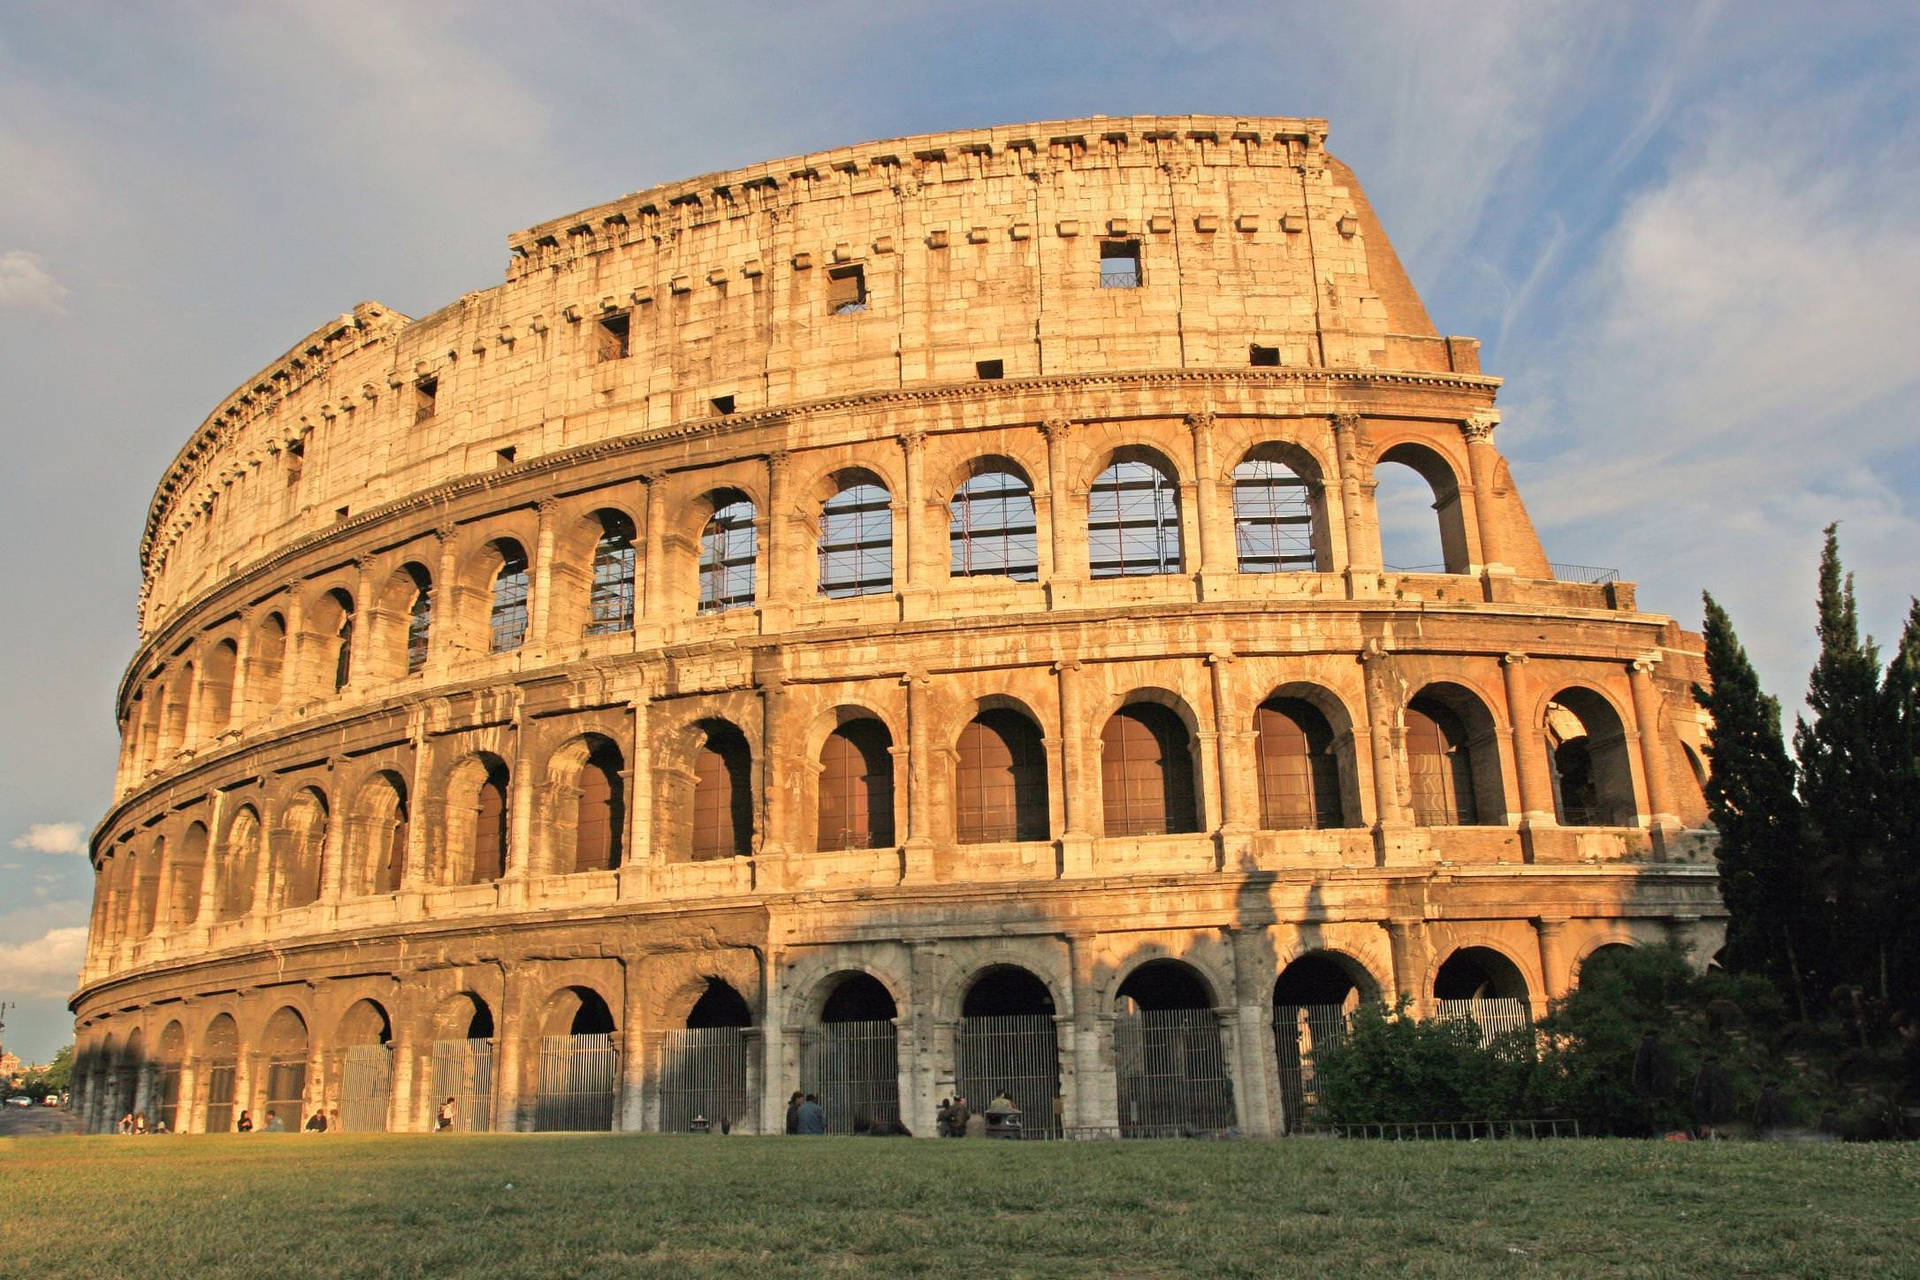 Colosseum 2172 X 1448 Wallpaper